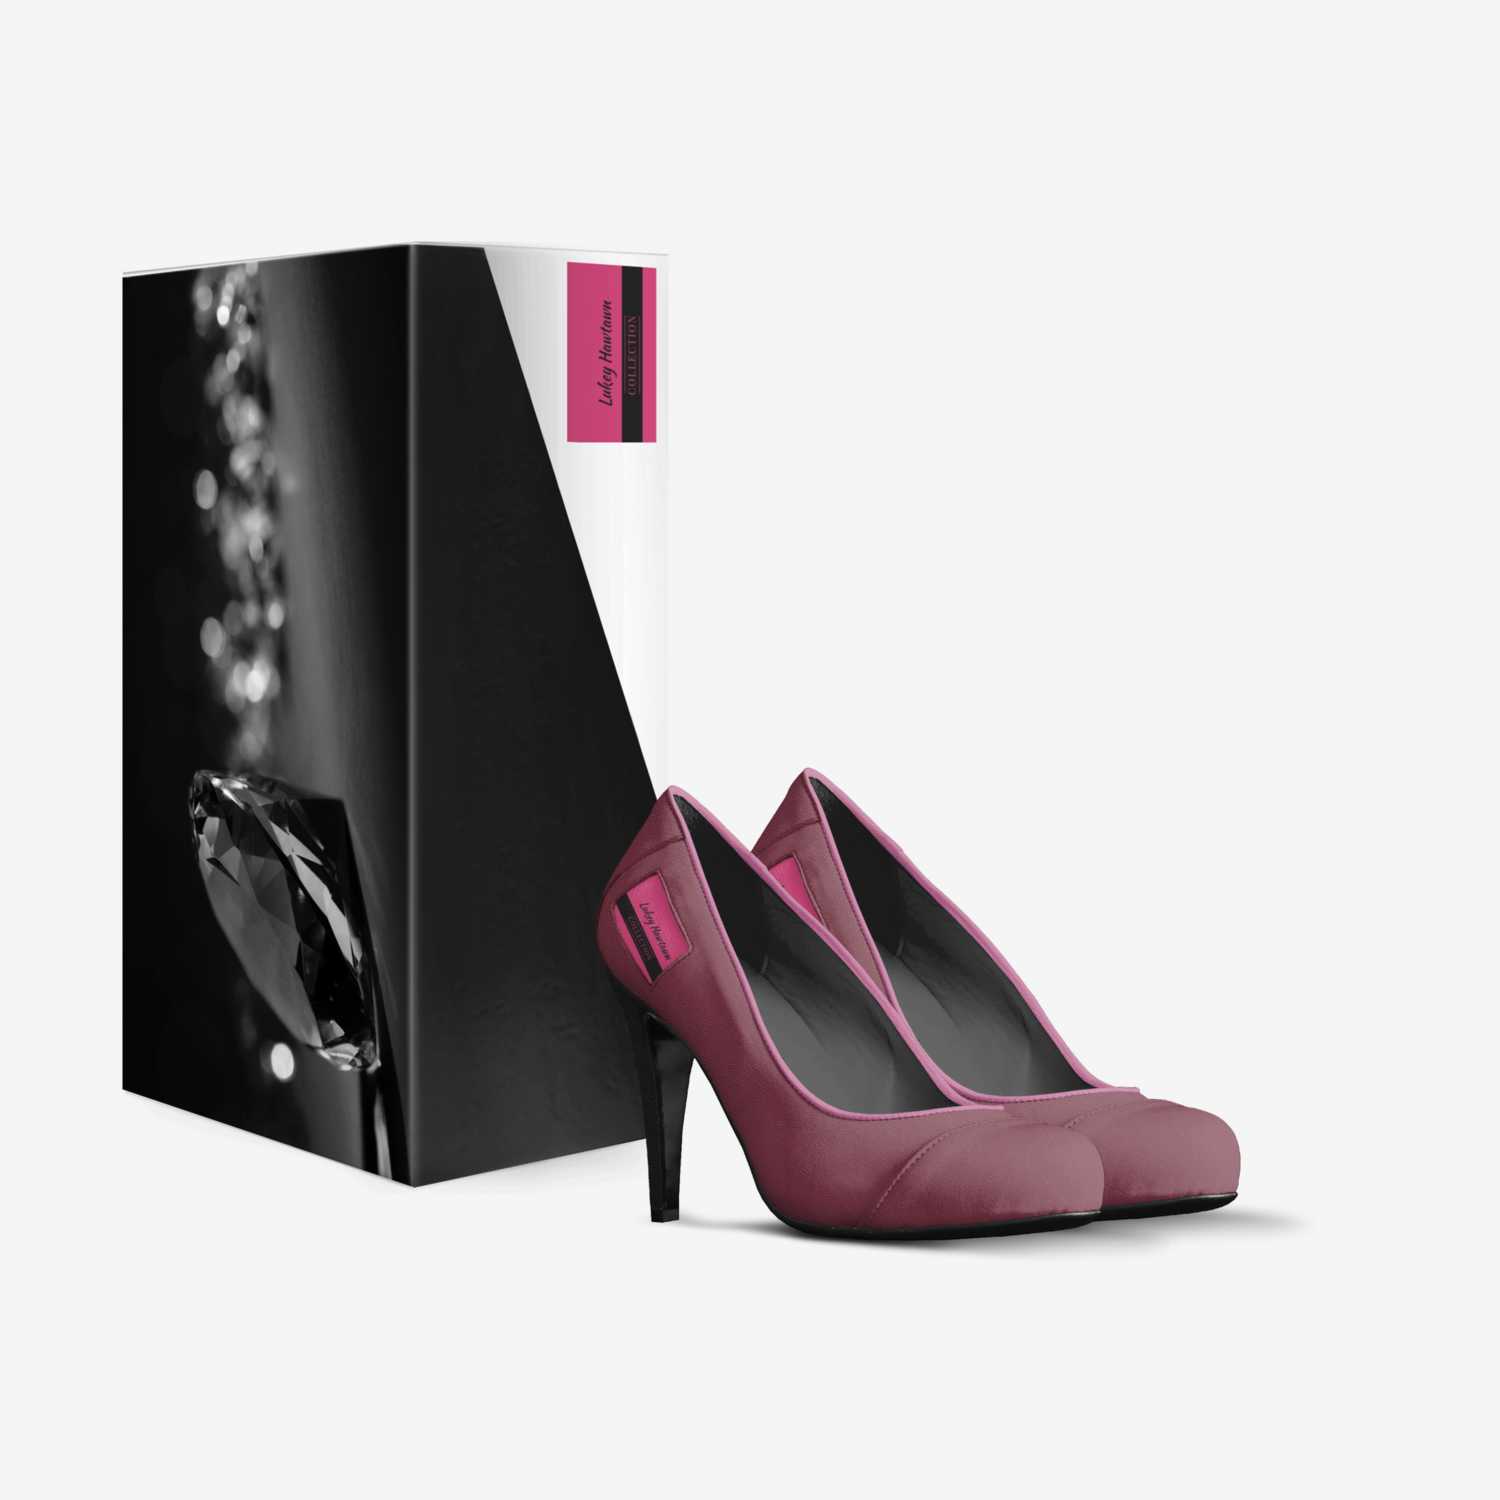 LH custom made in Italy shoes by Luke Miachel Hawkins | Box view